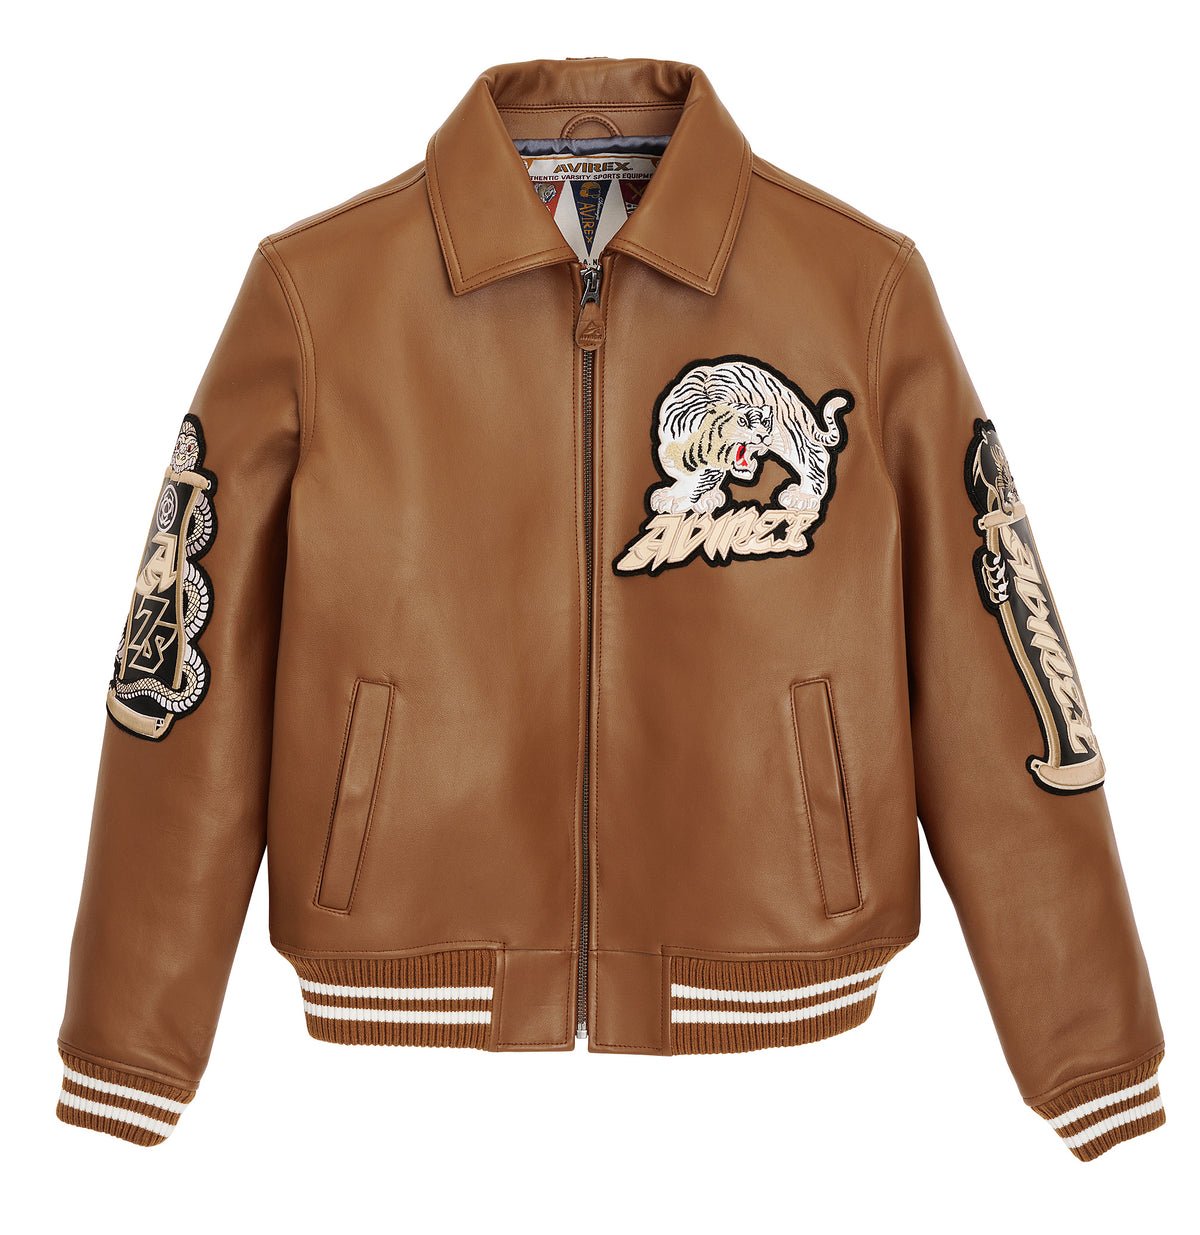 Plus Size Fashion Leather Jackets Limited Edition Colour Block ICON JACKET  AVIREX USA From Mmfurs_studios, $356.43